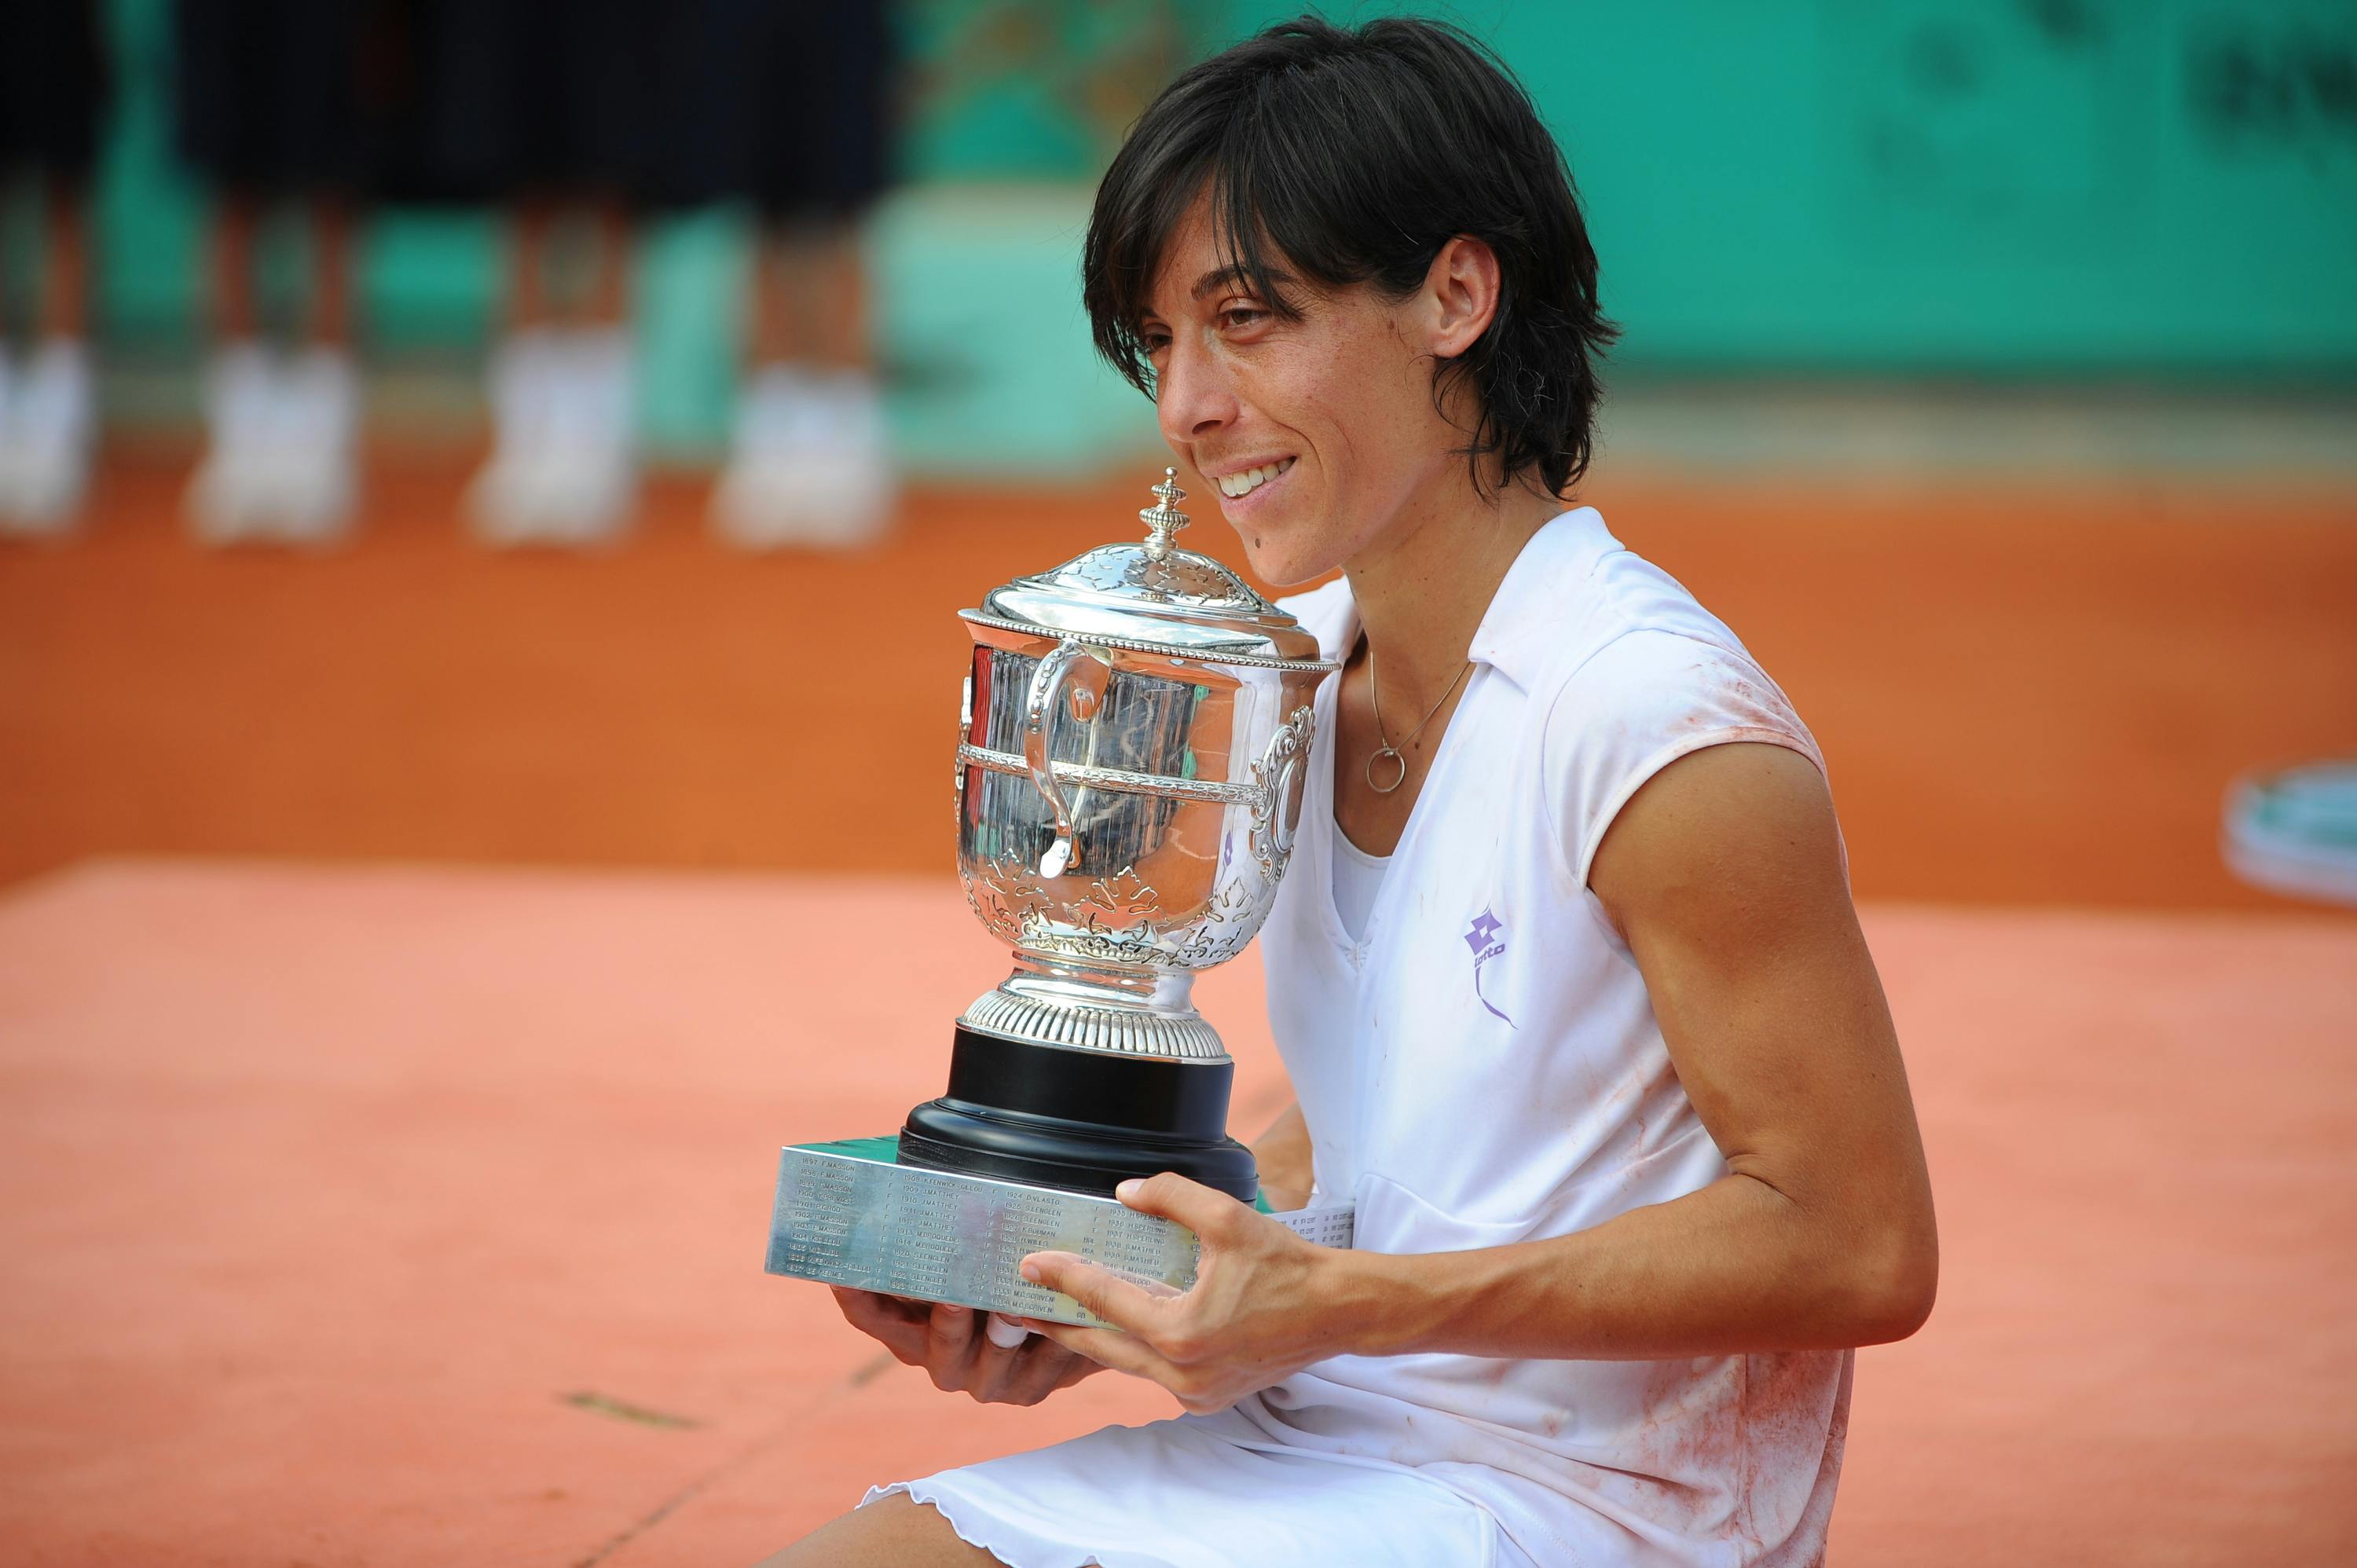 Francesca Schiavone with her trophy at Roland-Garros 2010